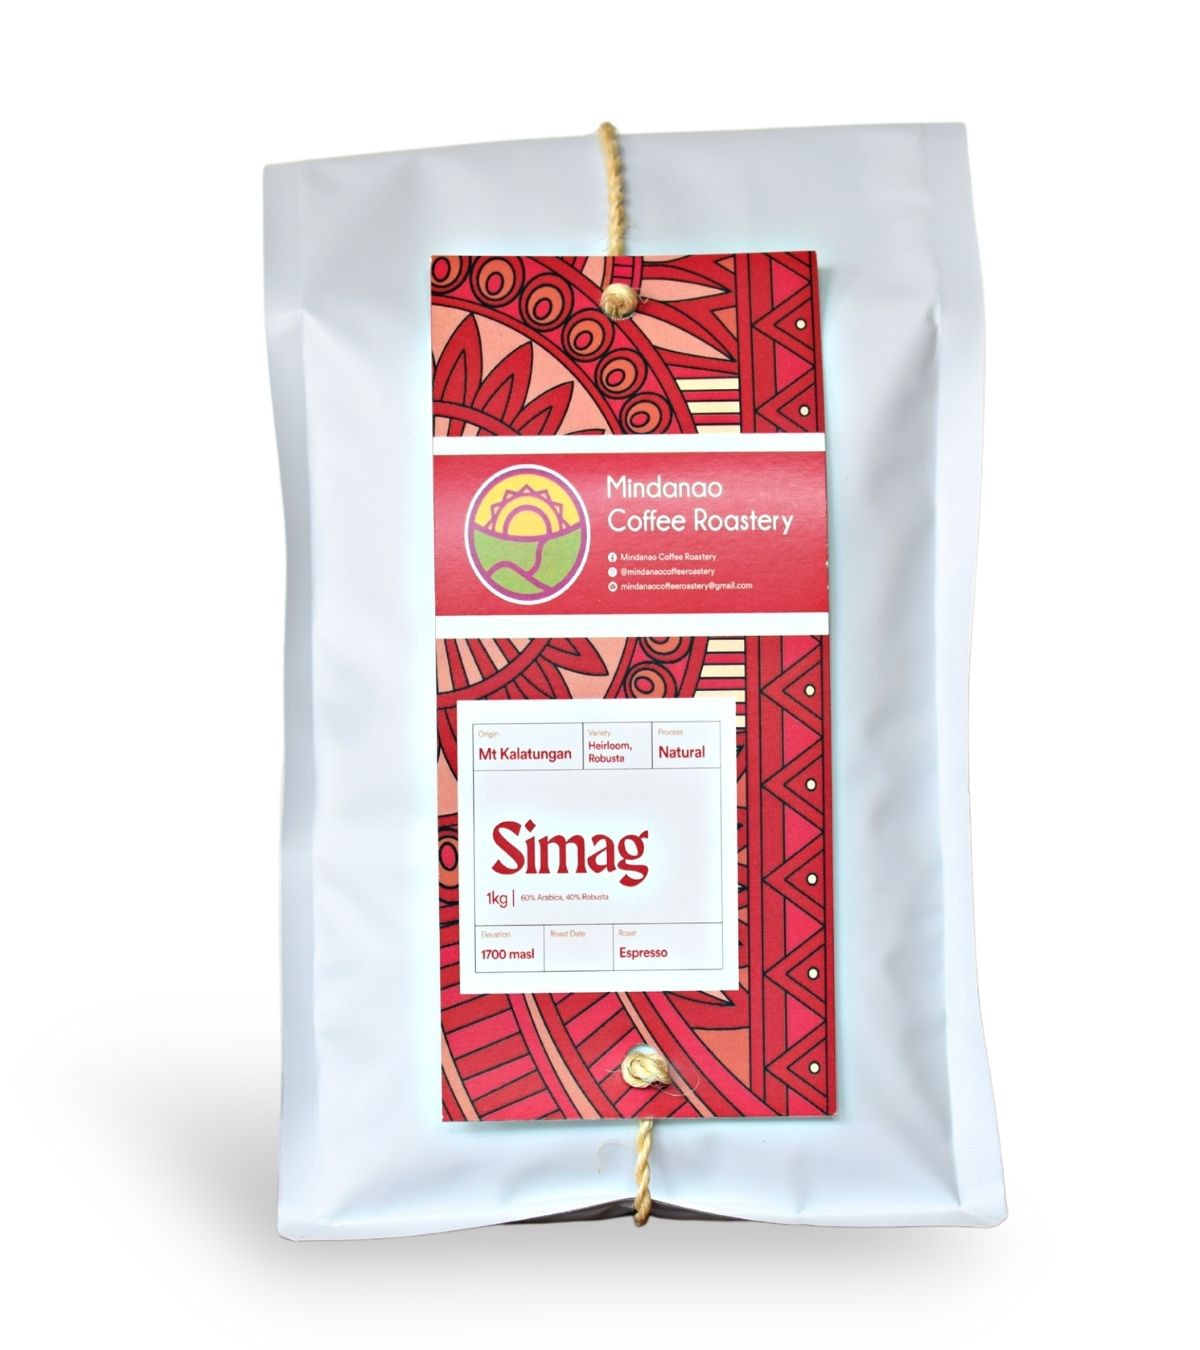 Simag - Mindanao Coffee Roastery